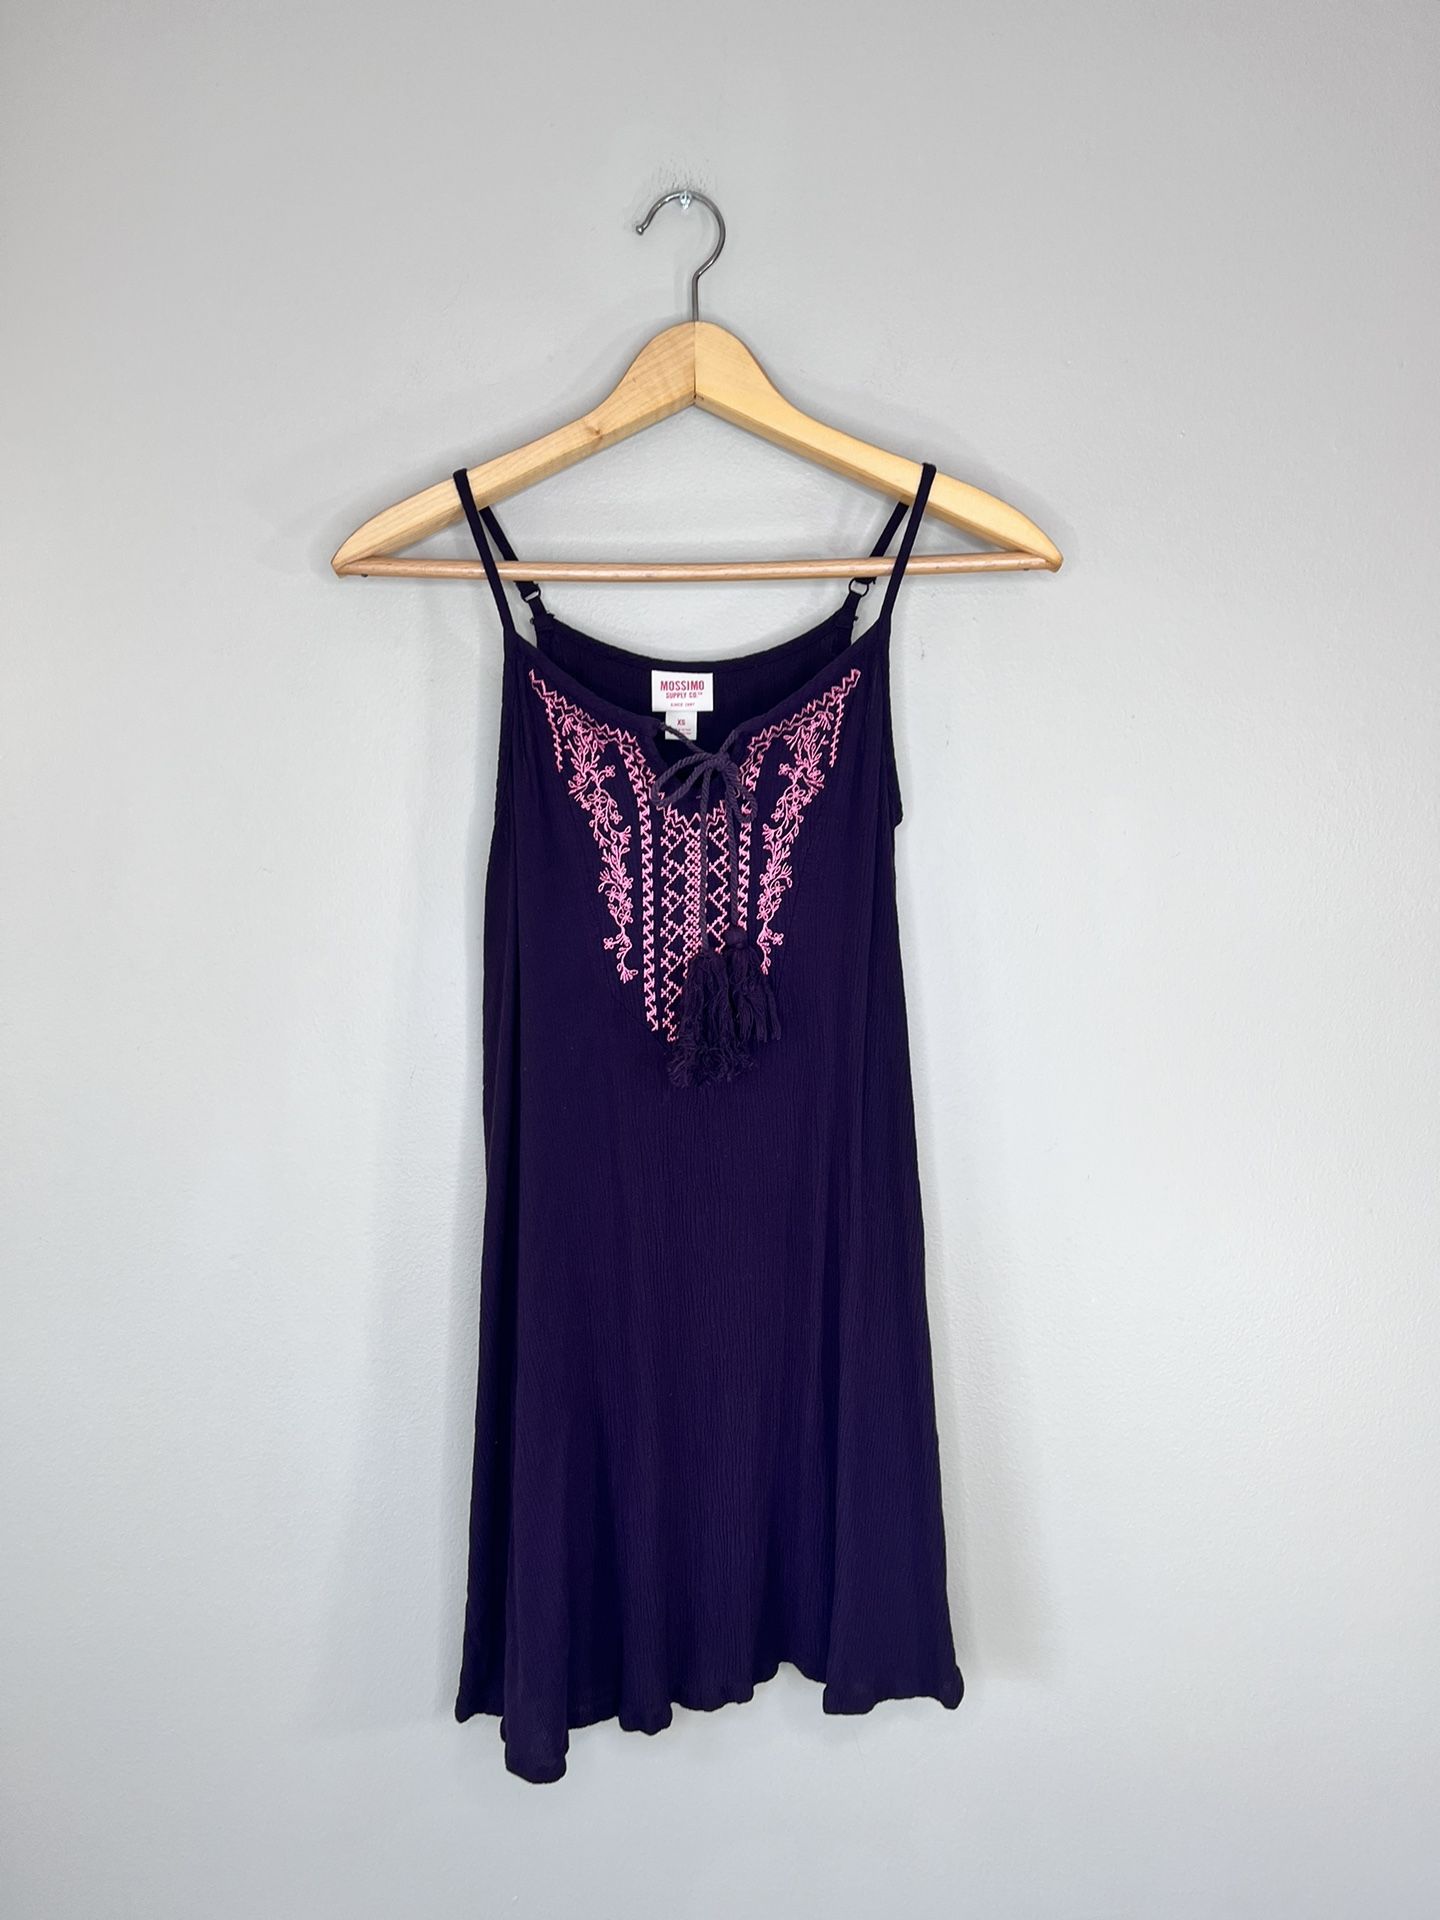 Mossimo XS Purple Pink Embroidered Boho Mini Swim Cover-up Mini Dress Summer Sun Dress